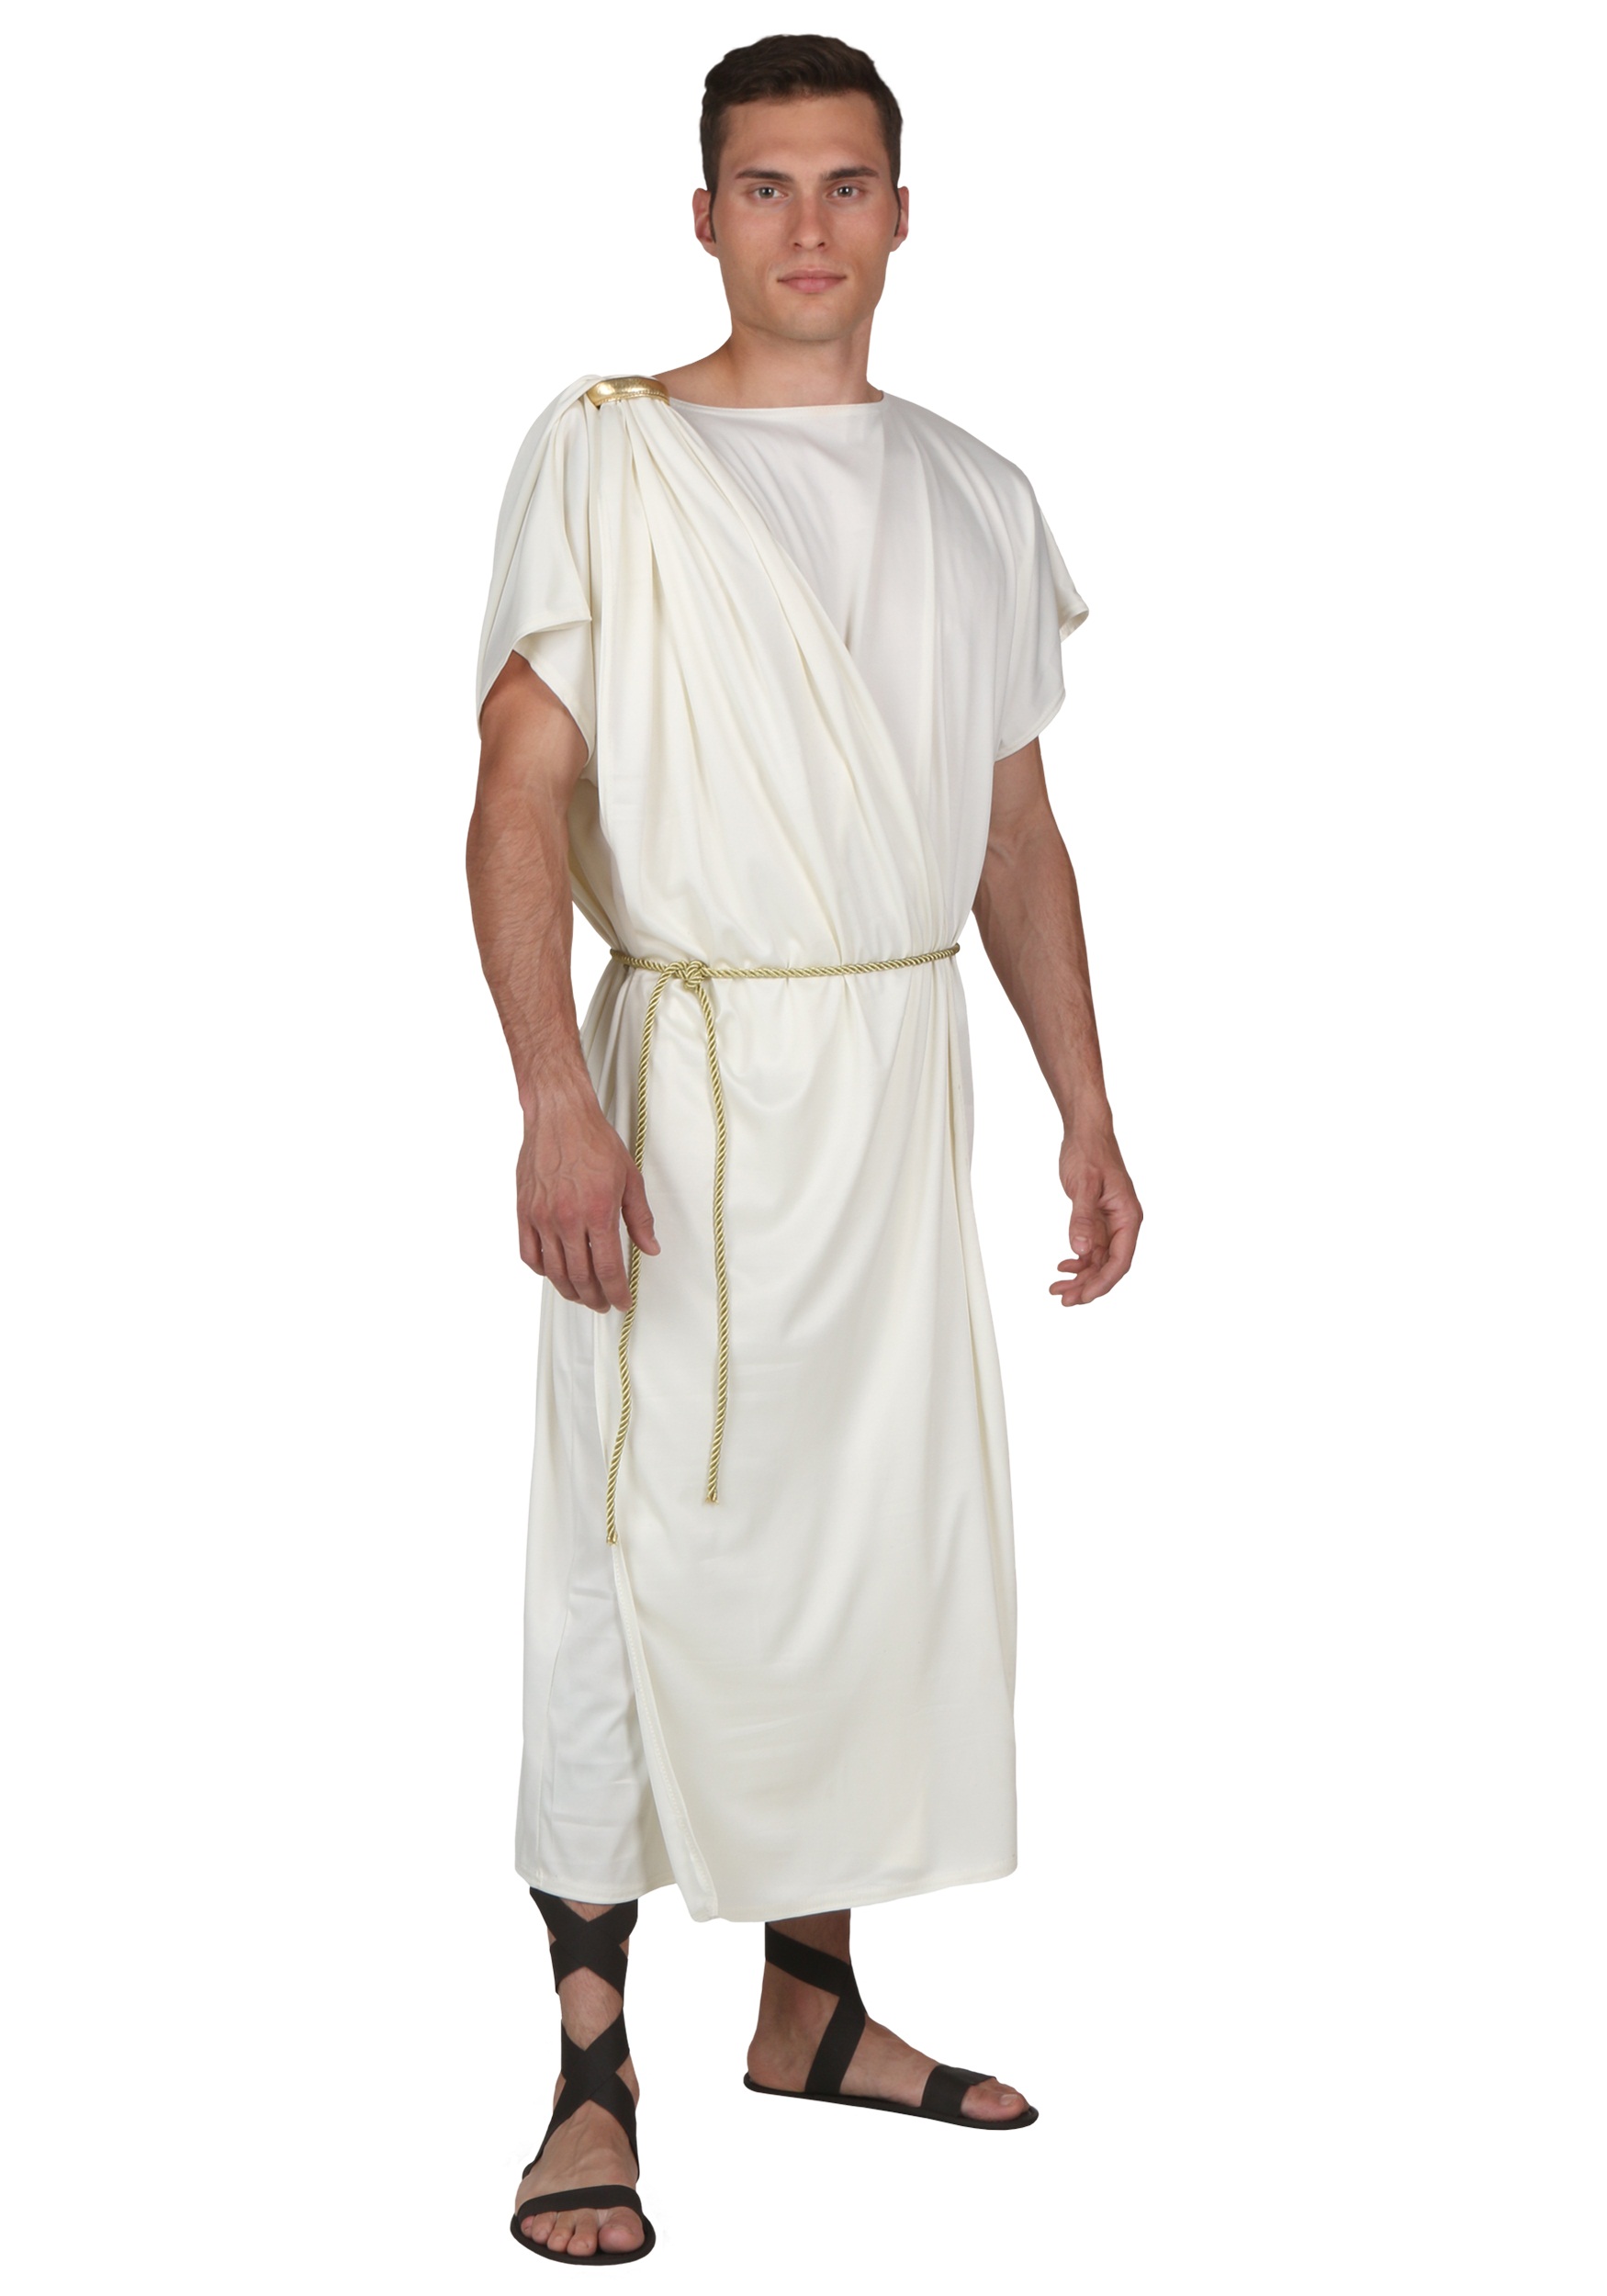 Goddess Costume Adult Greek or Roman Toga Halloween Fancy Dress Outfit 